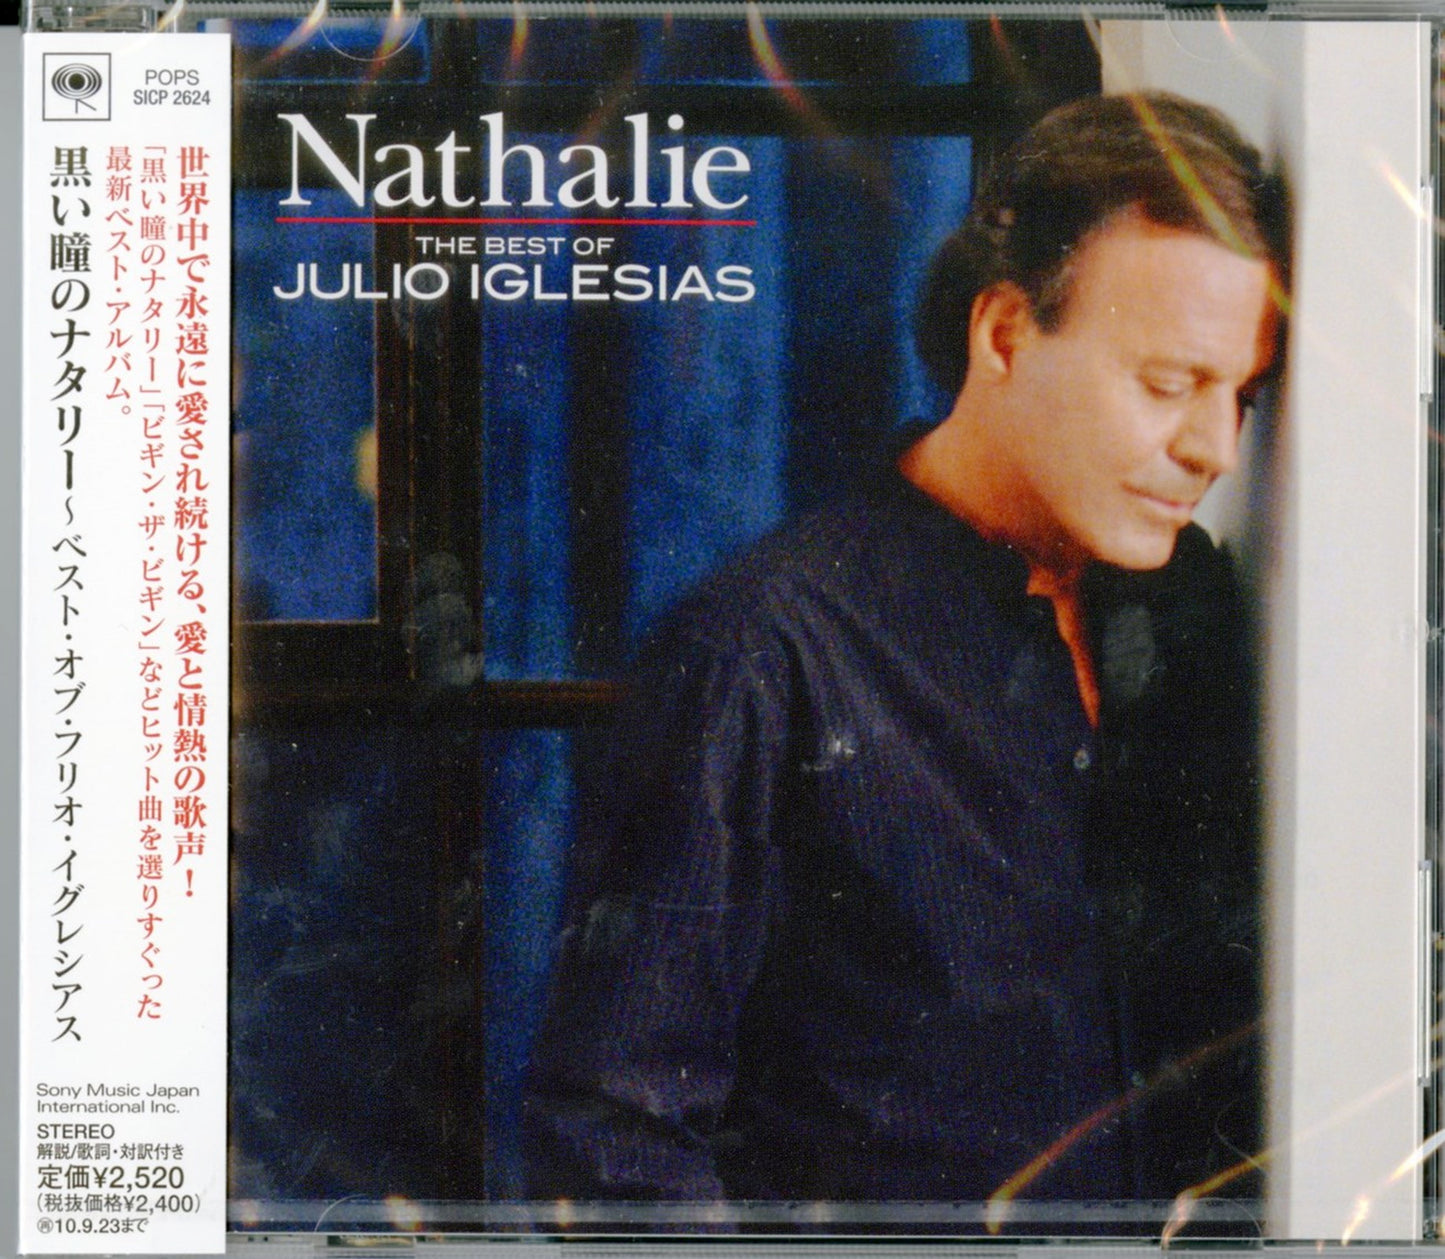 Julio Iglesias - Nathalie Best Of Julio Iglesias - Japan  CD+Book